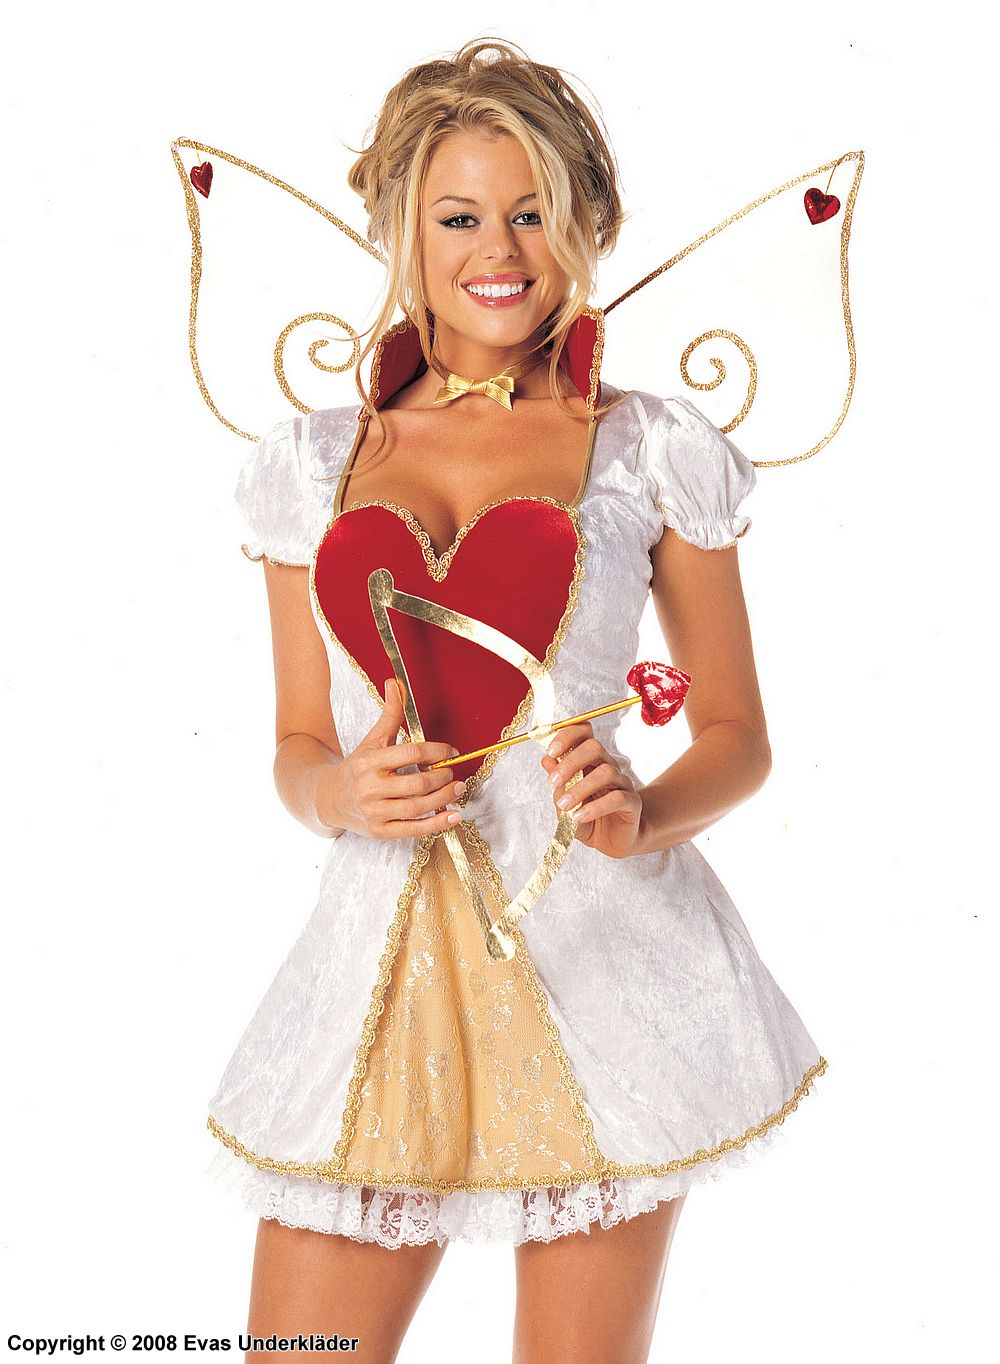 Cupid costume